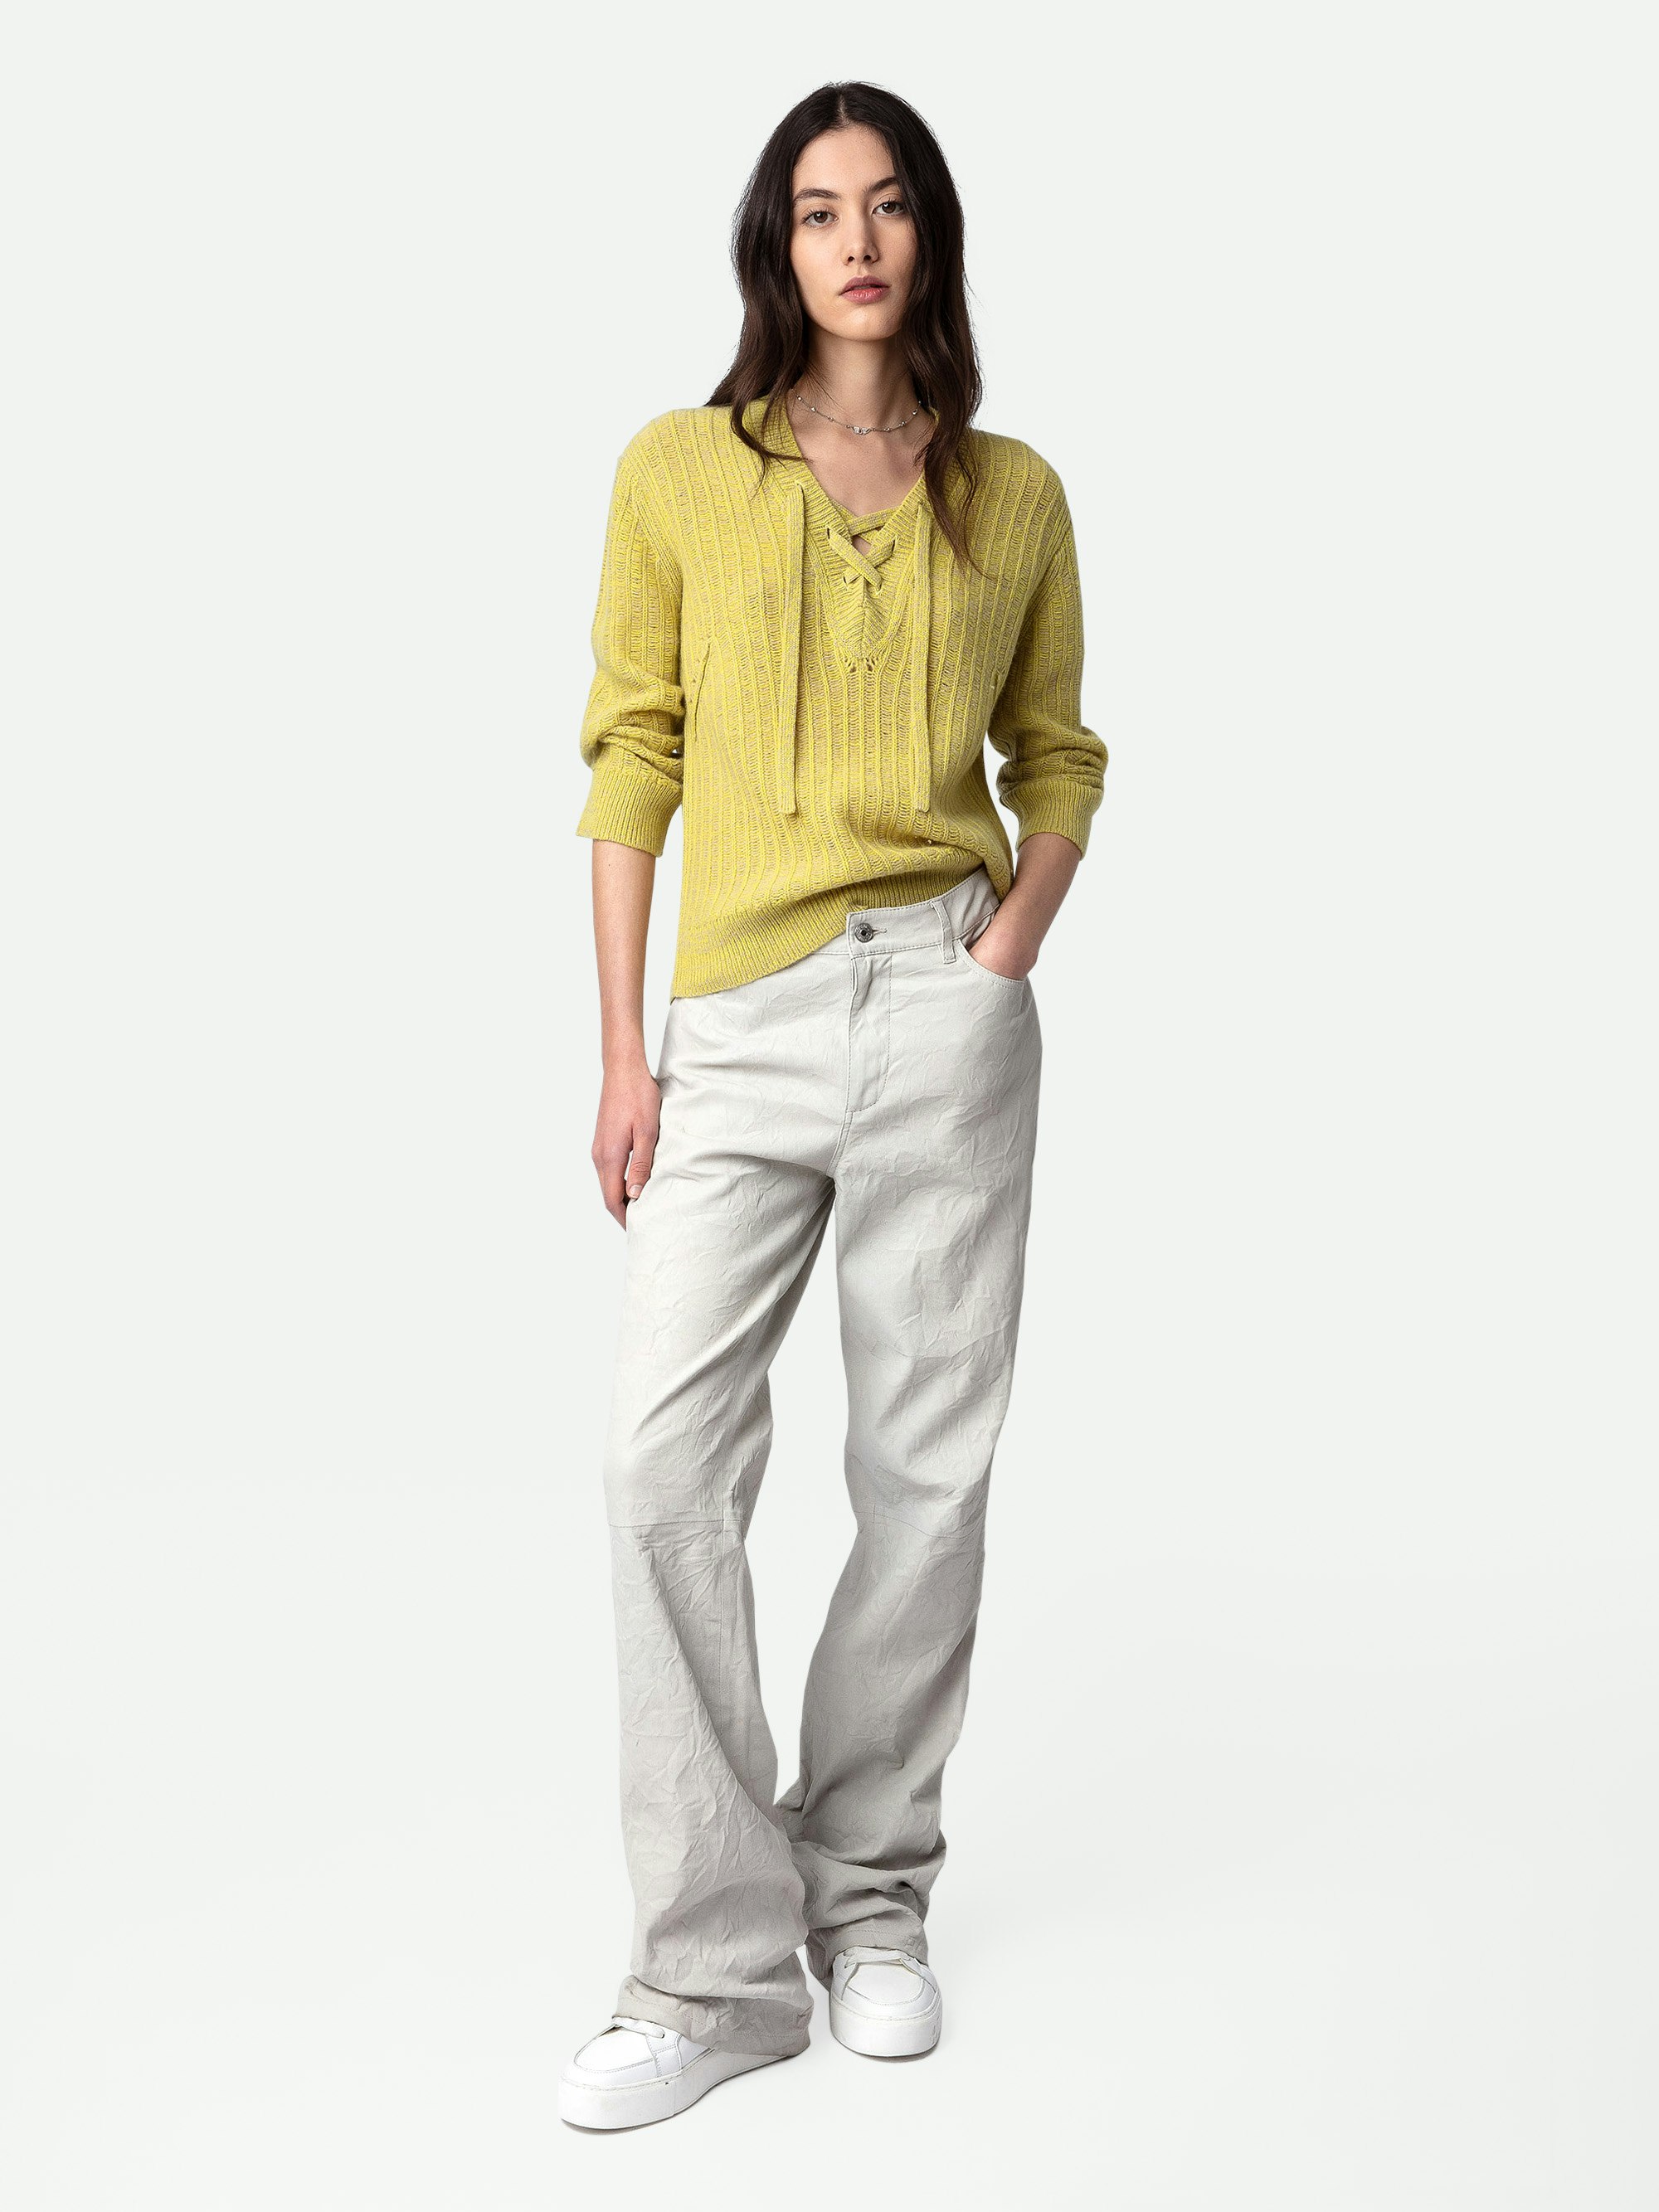 Fanny Jumper 100% Merino Wool - Light yellow 100% merino wool jumper with openwork details, long sleeves and drawstring ties.